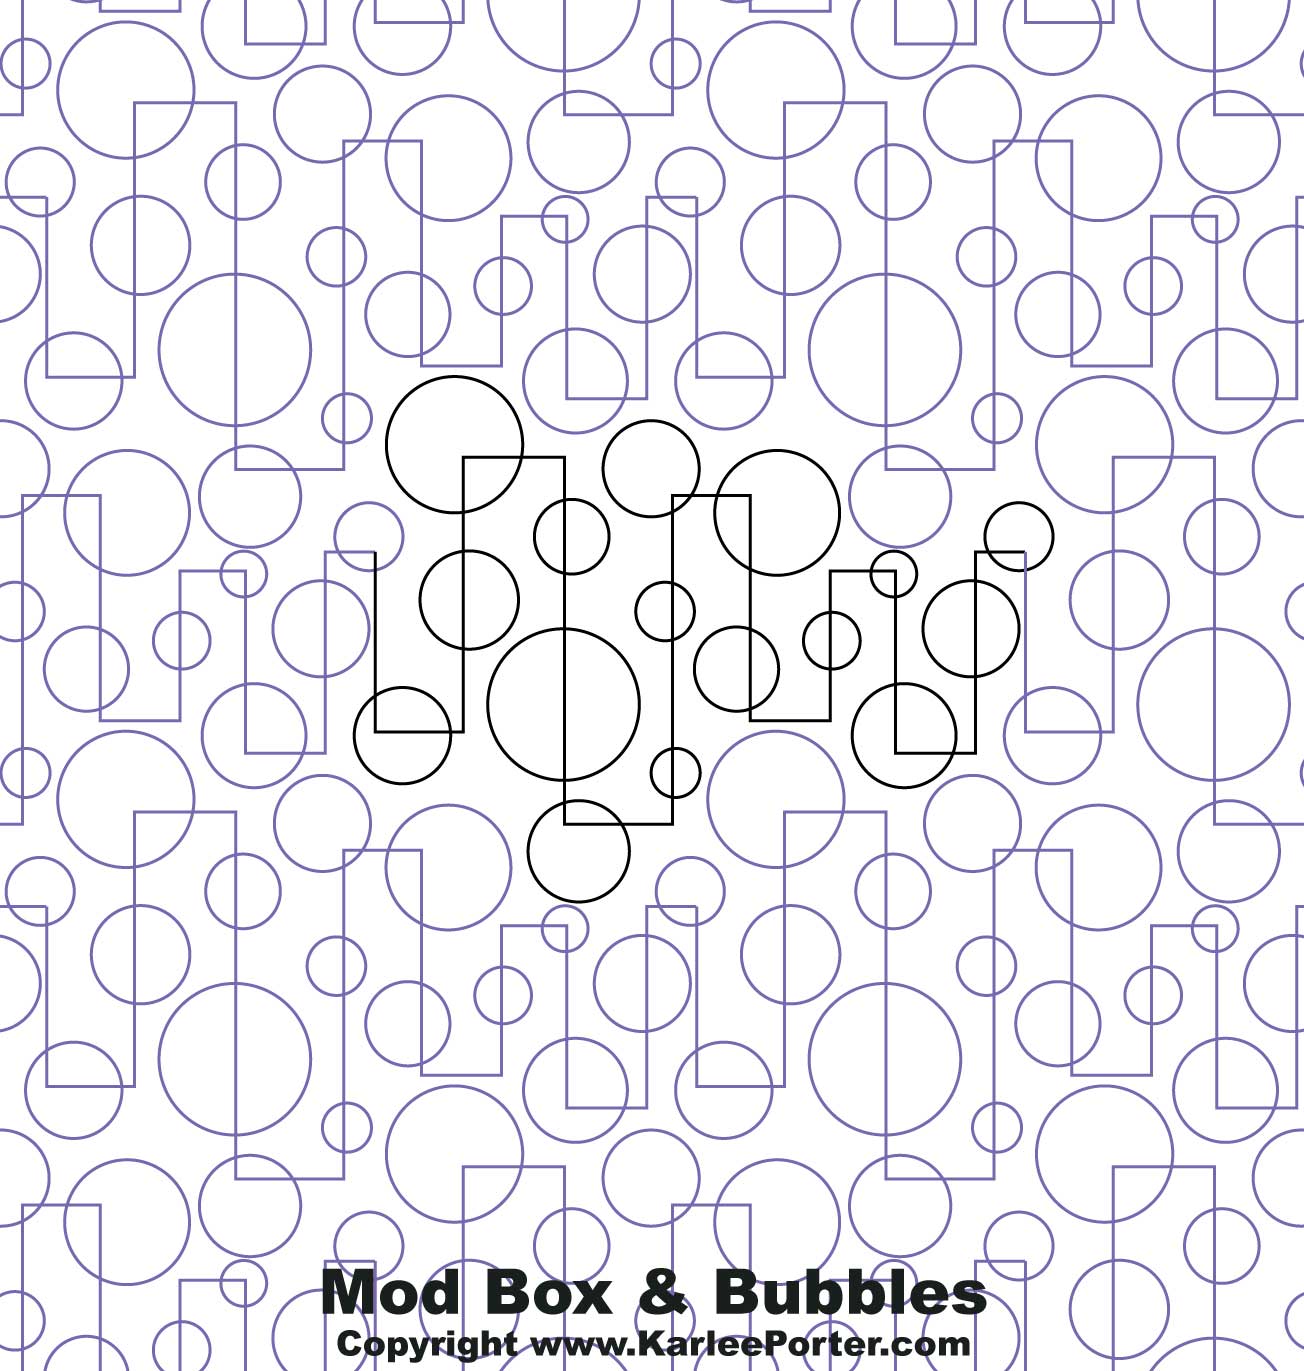 Mod Box & Bubbles